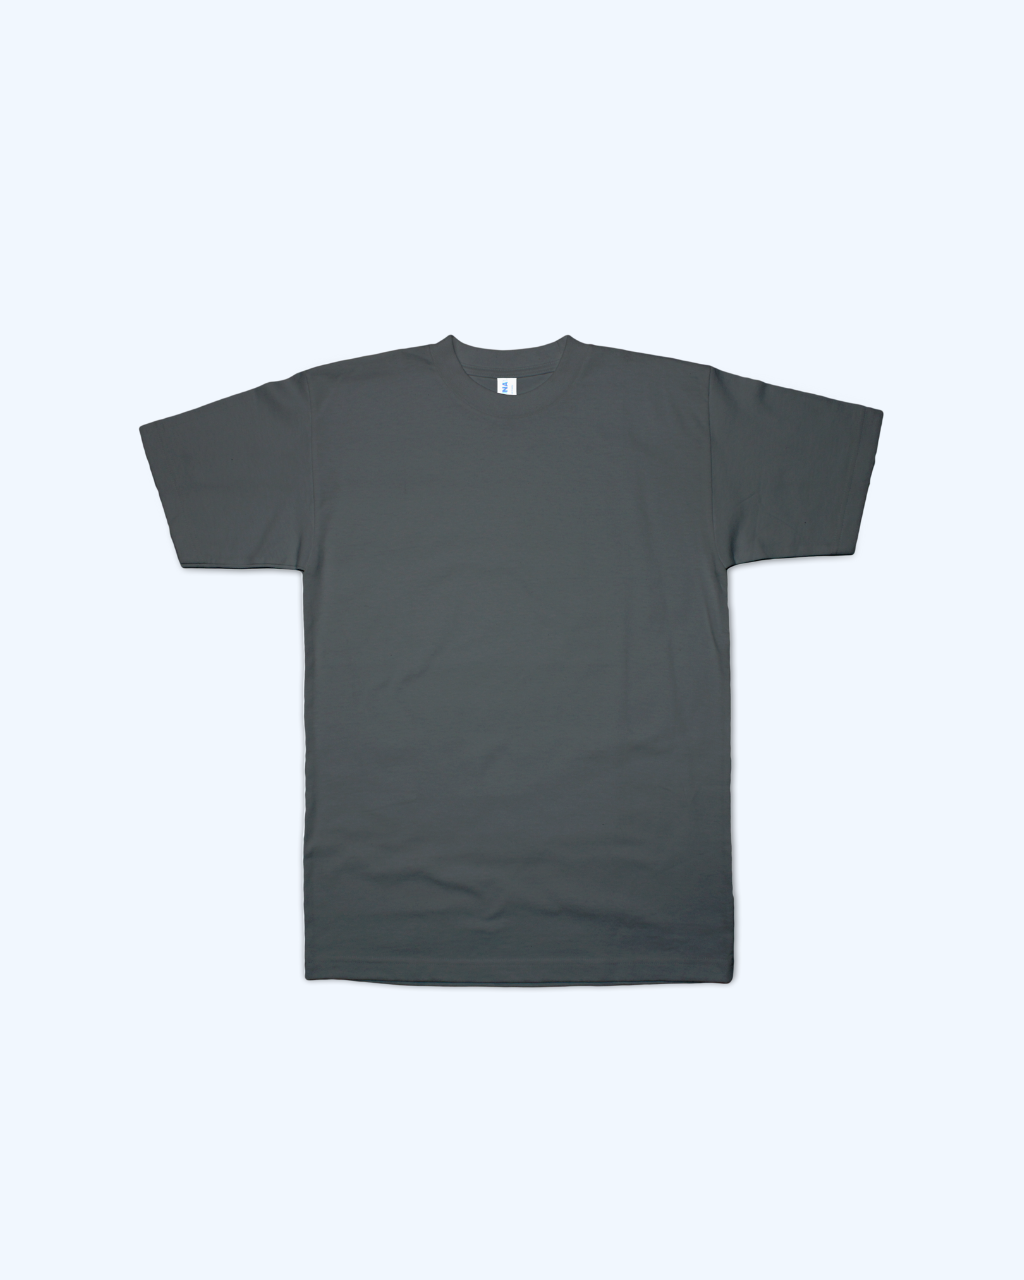 Adult Charcoal short sleeve t-shirt